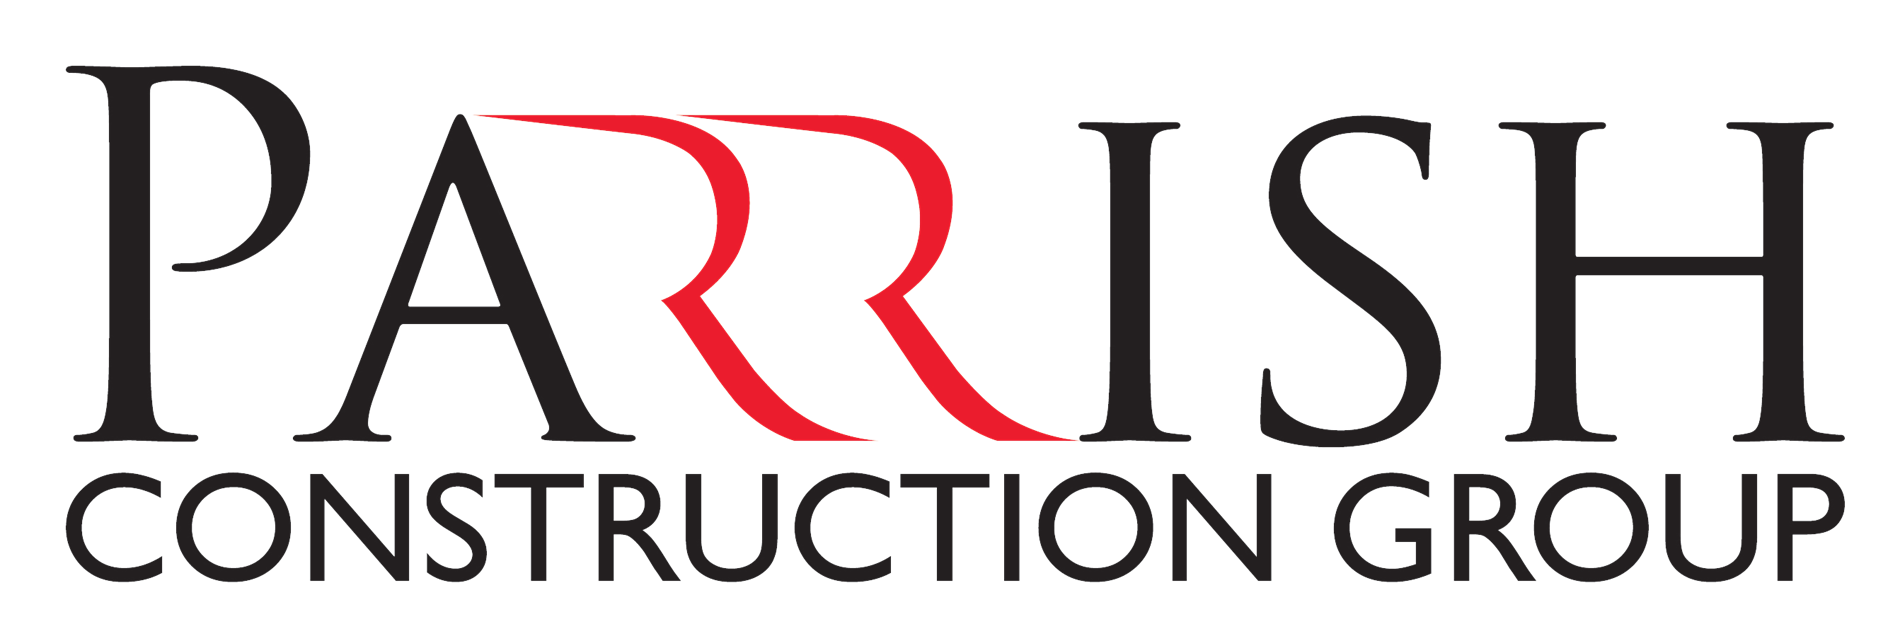 Parrish Construction Group Logo